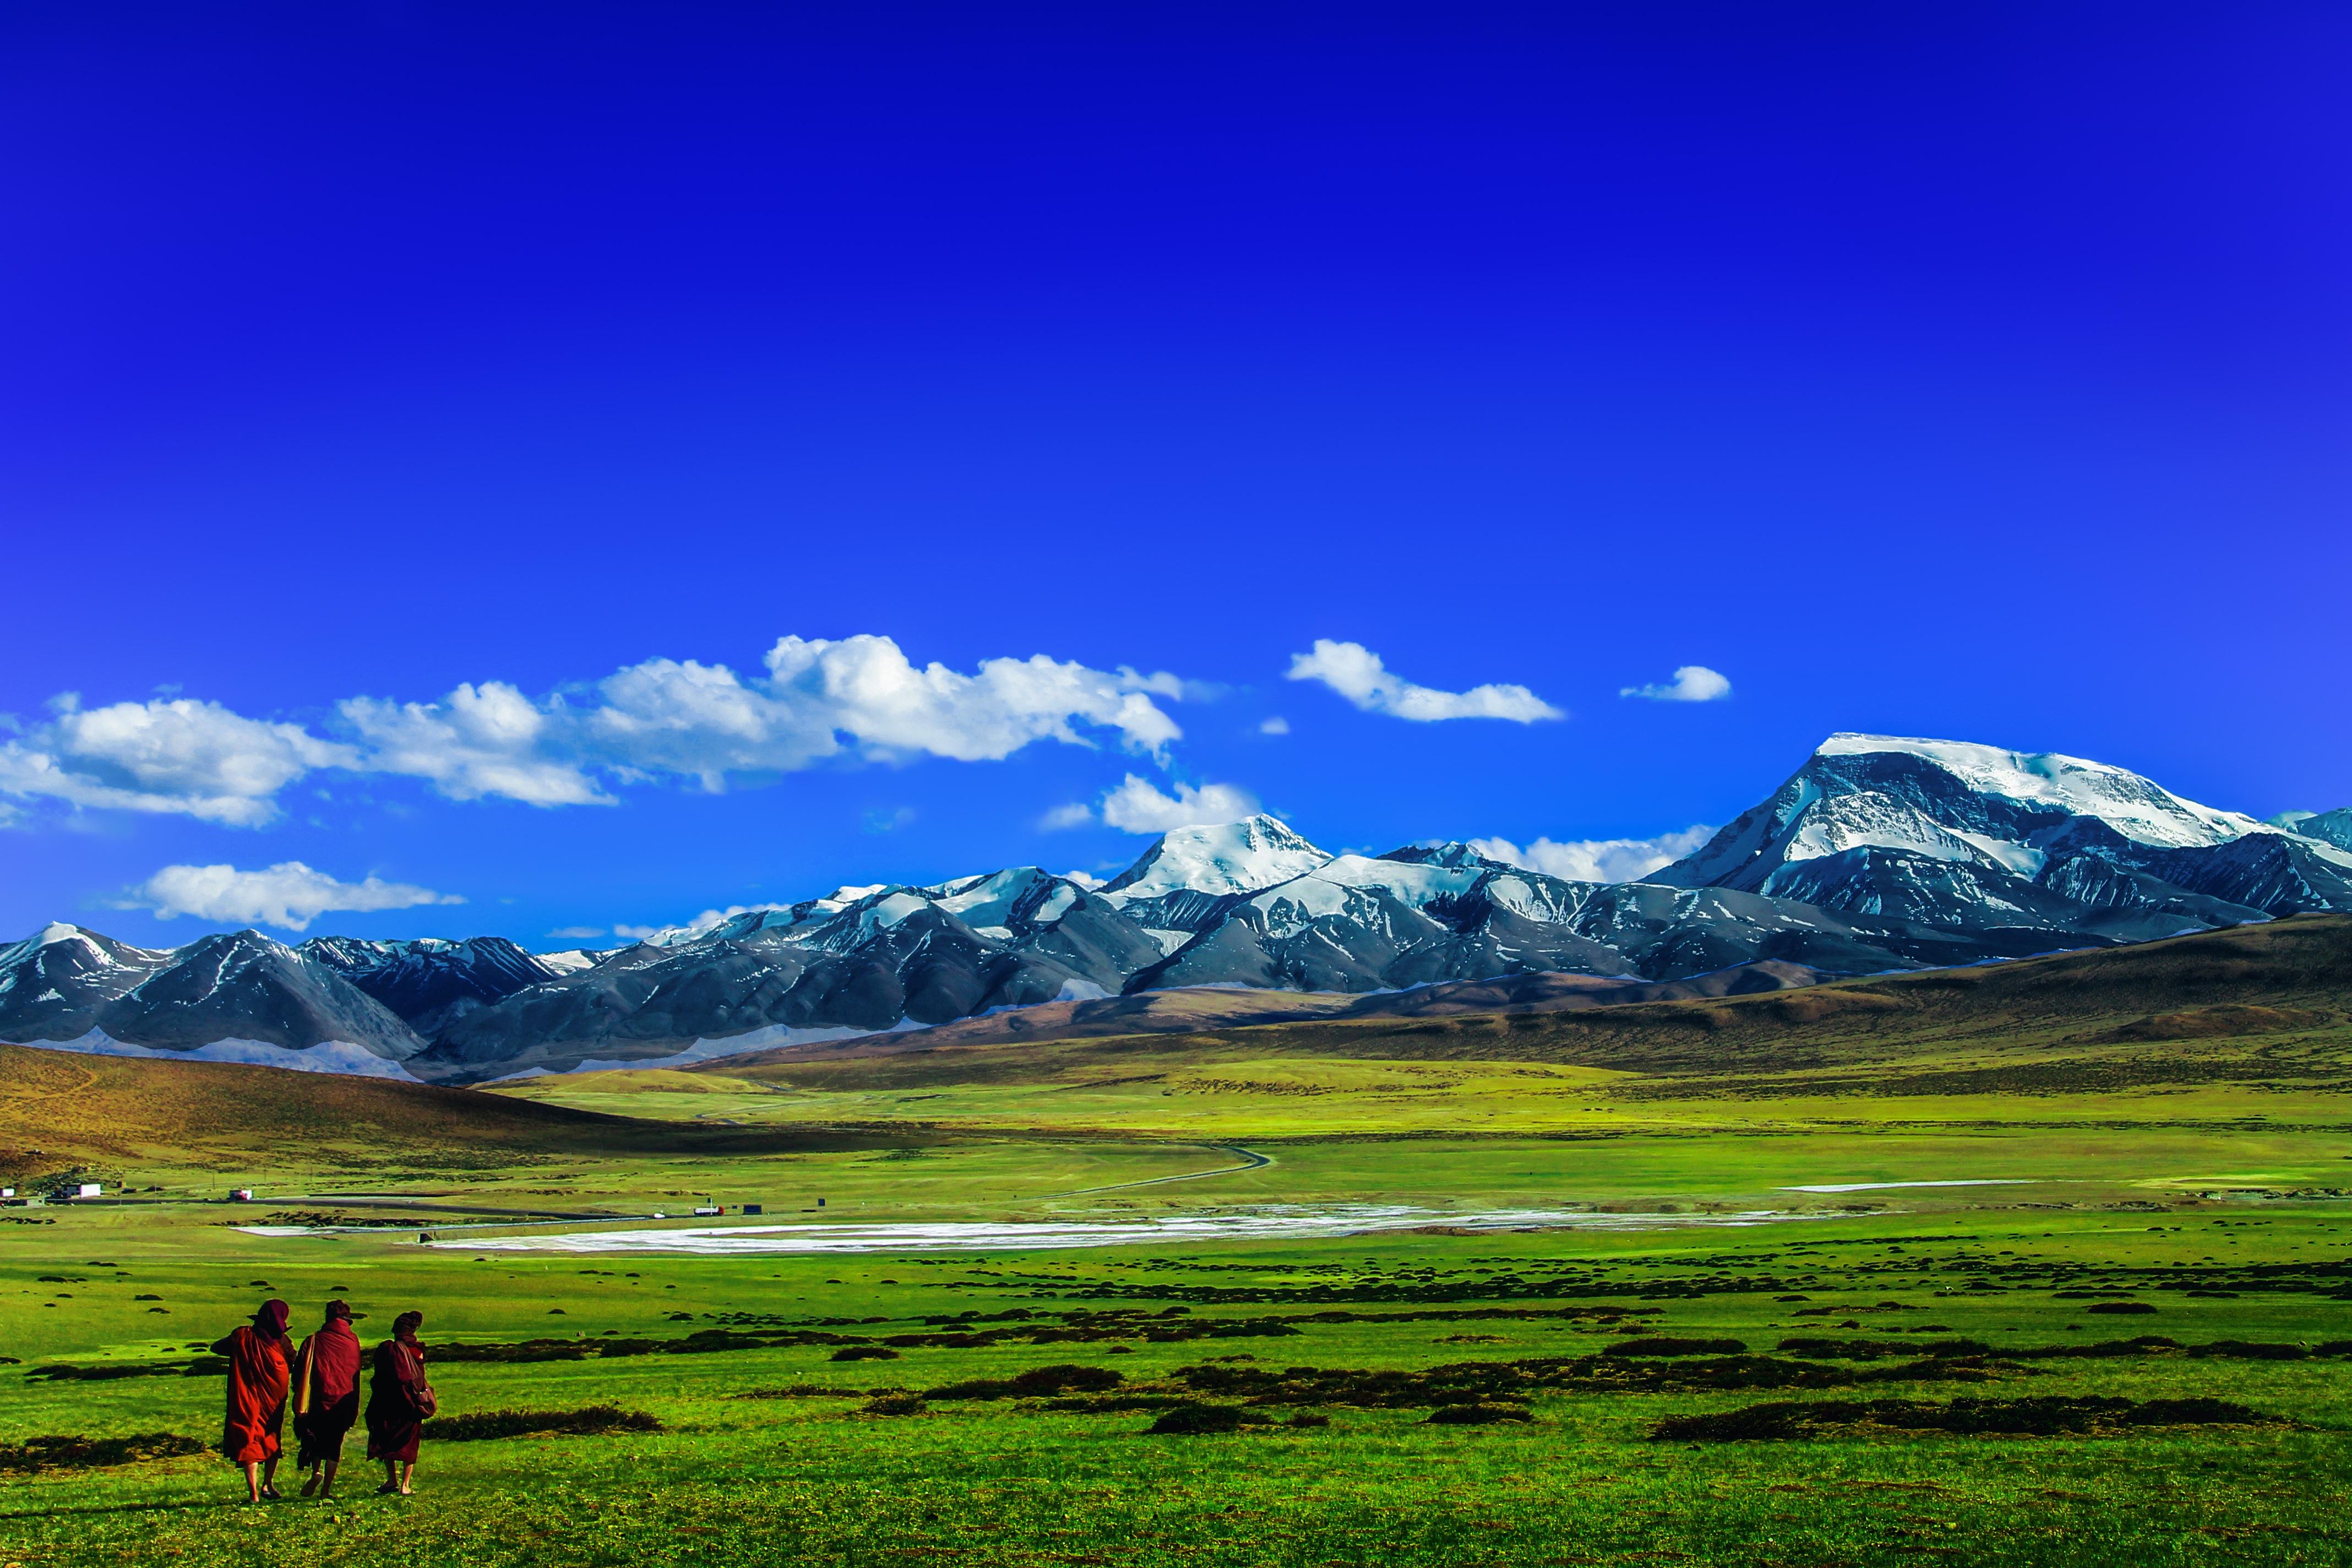 qinghai-tibet-plateau-1.jpg